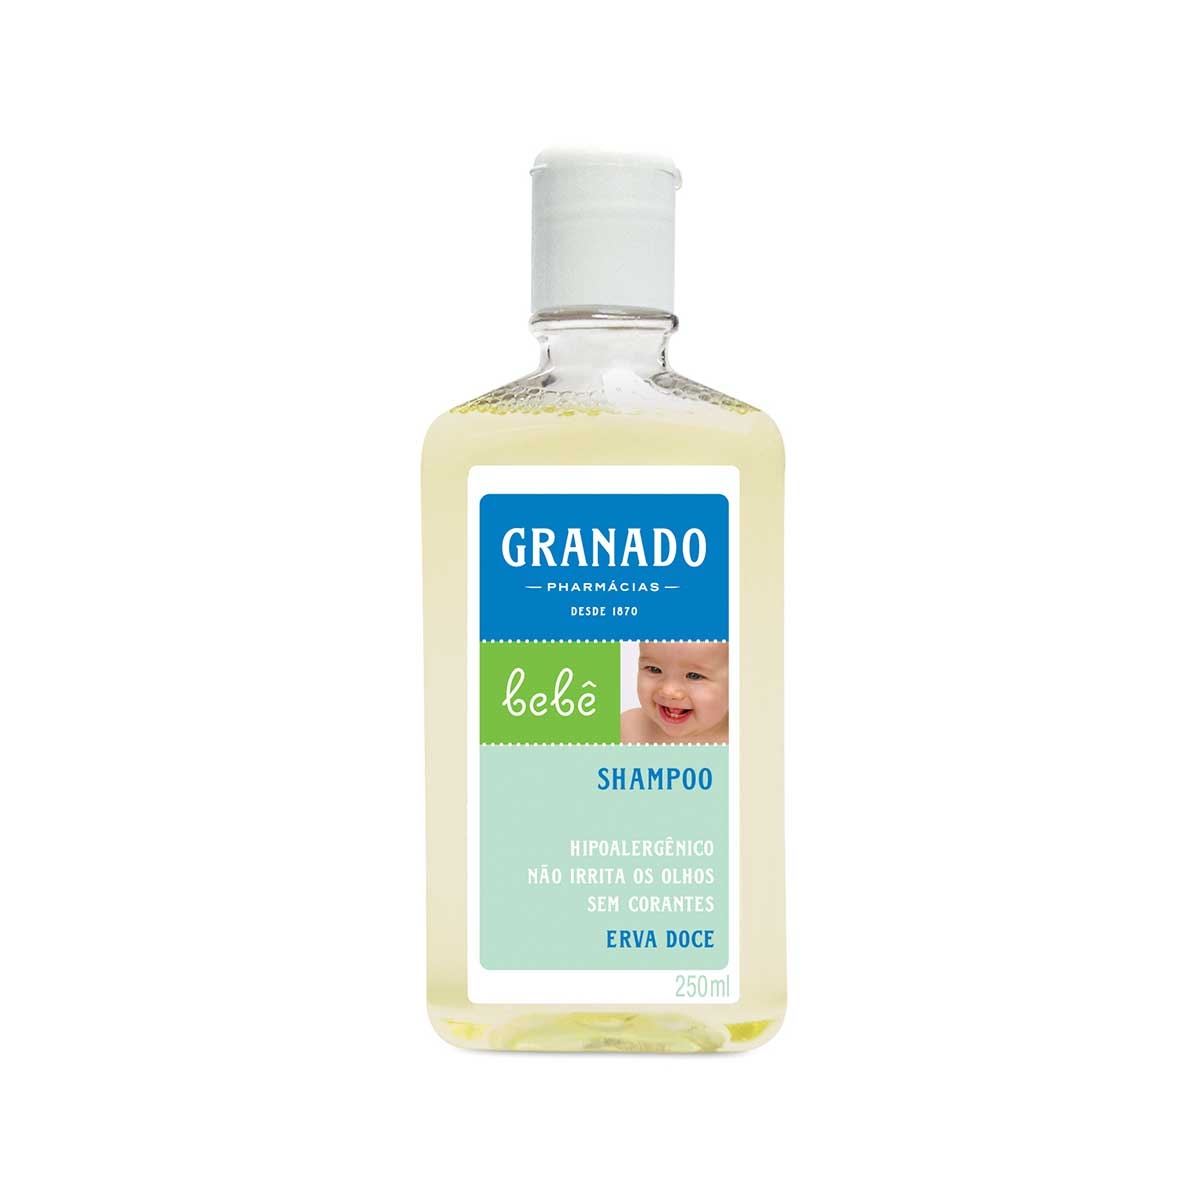 Shampoo Granado Bebê Erva Doce com 250ml 250ml